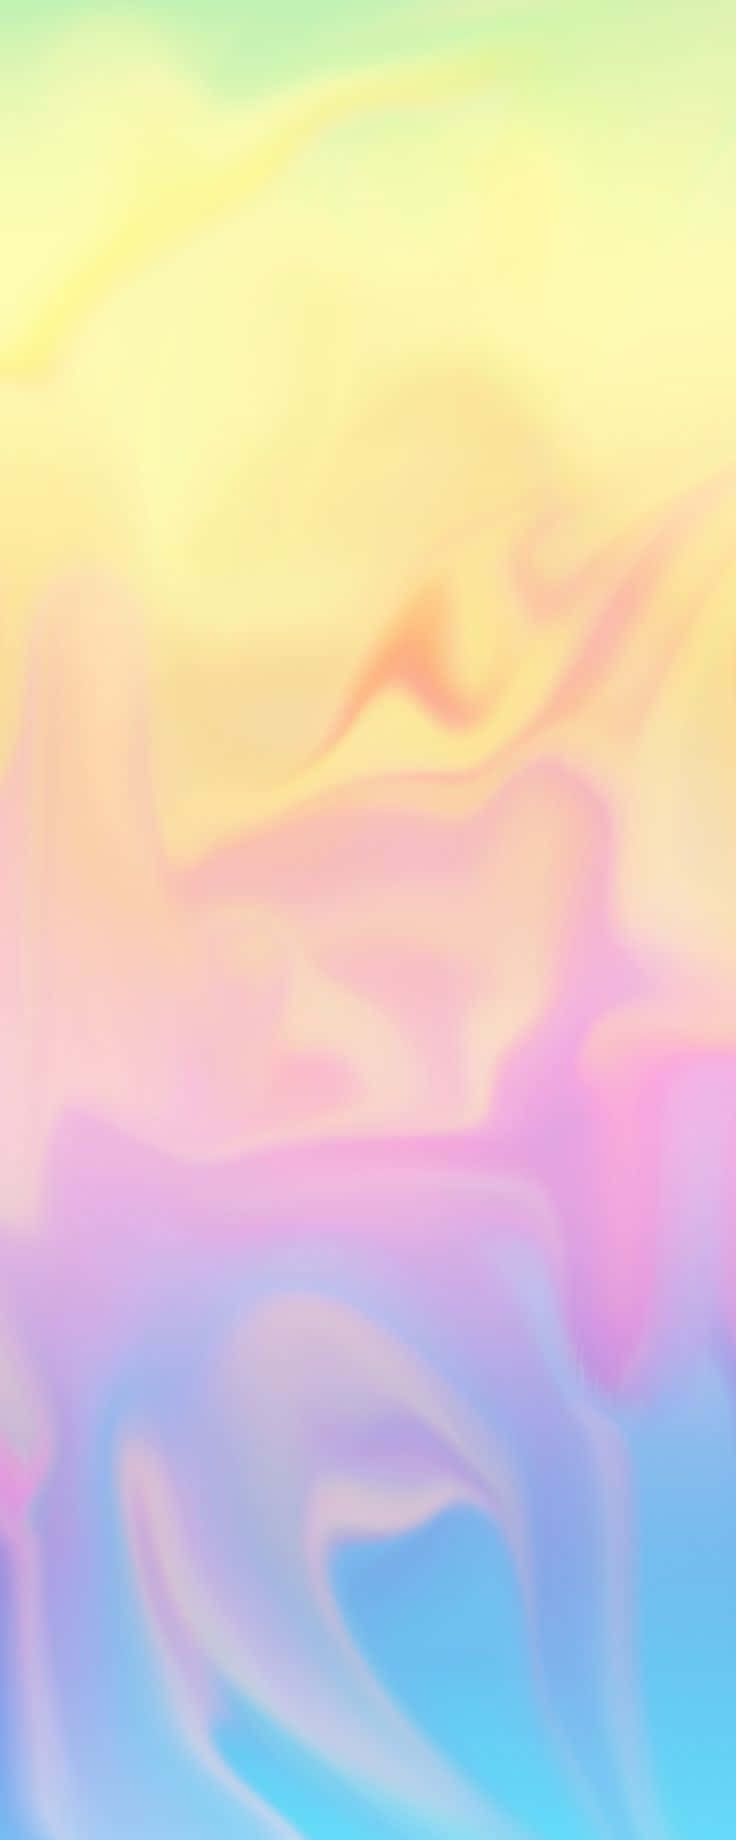 Spektakulärespastellregenbogen-iphone Wallpaper